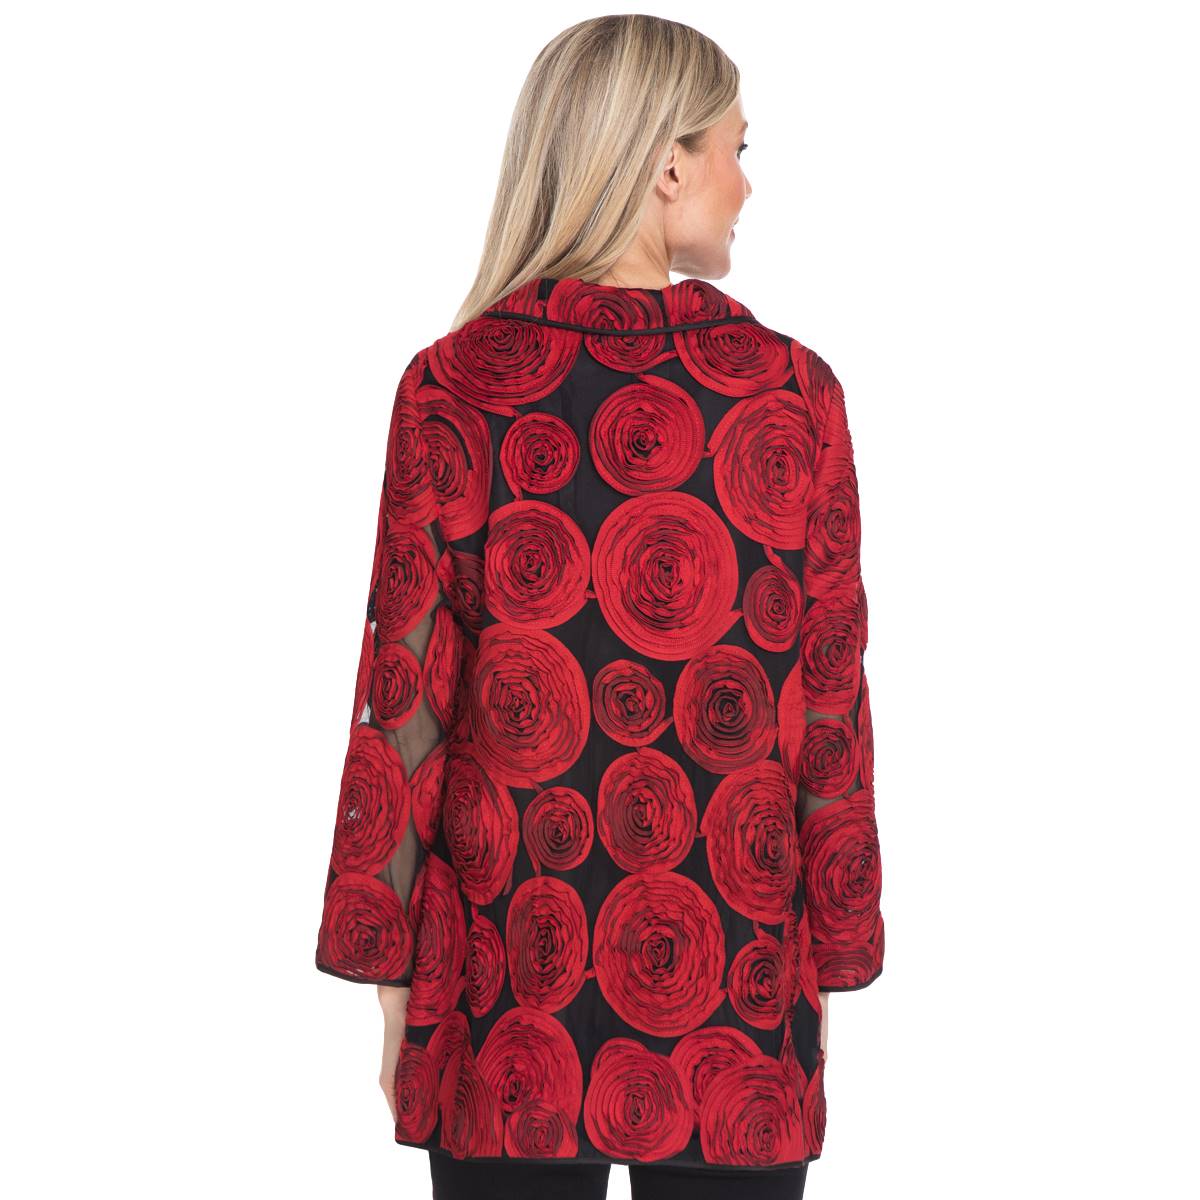 Womens Ali Miles 3/4 Sleeve Textured Woven Roses Flyaway Jacket